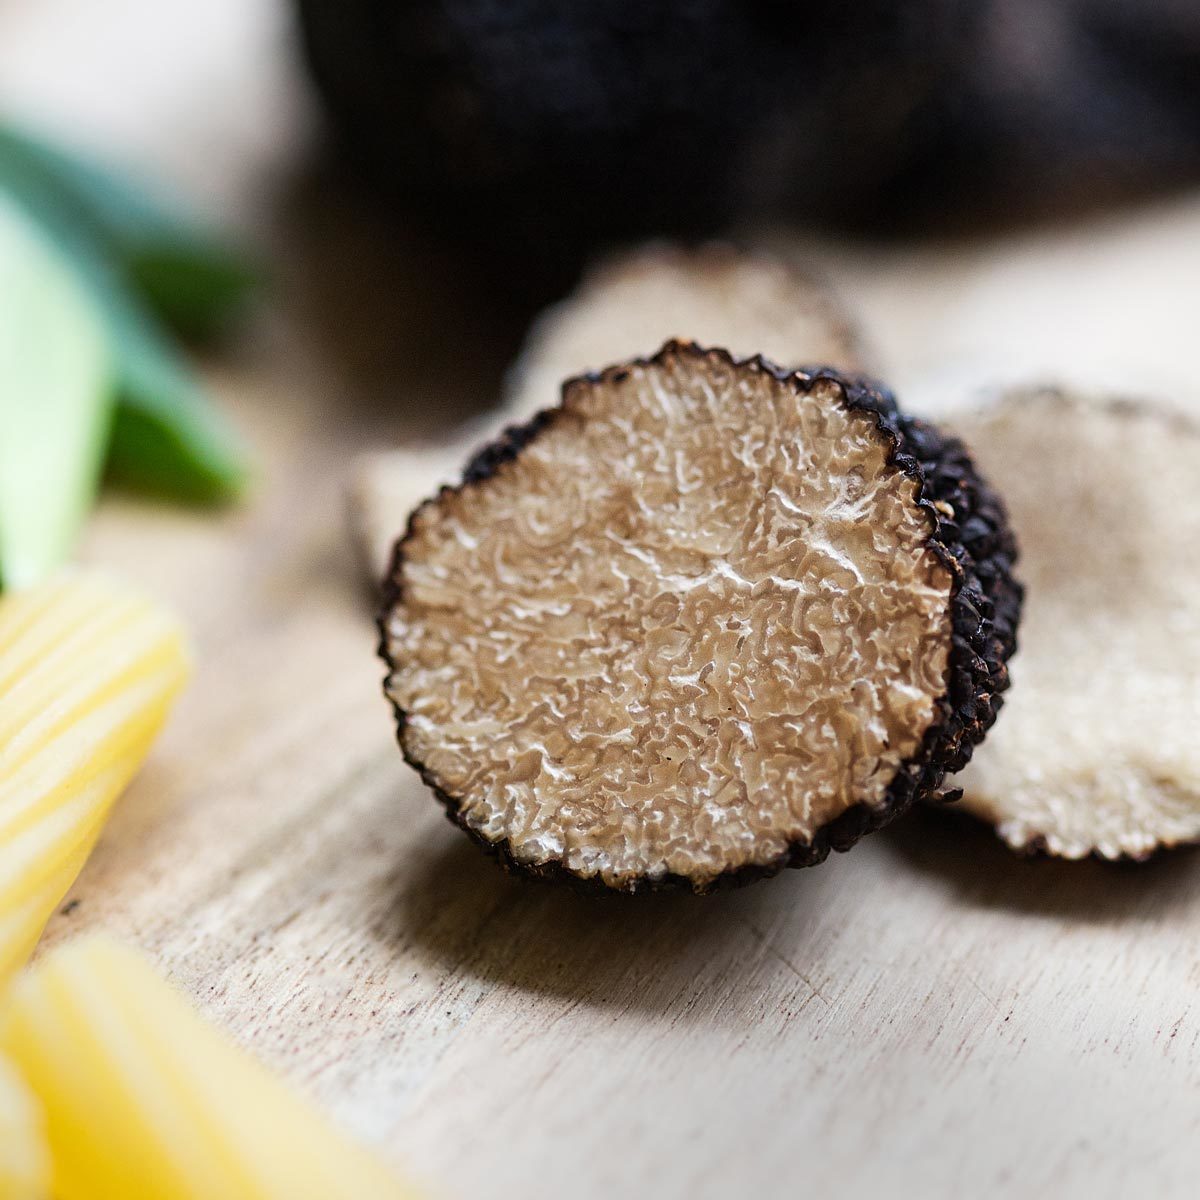 Truffle Hunter Fresh Black Summer Truffles (Tuber Aestivum), 100g Minimum Weight